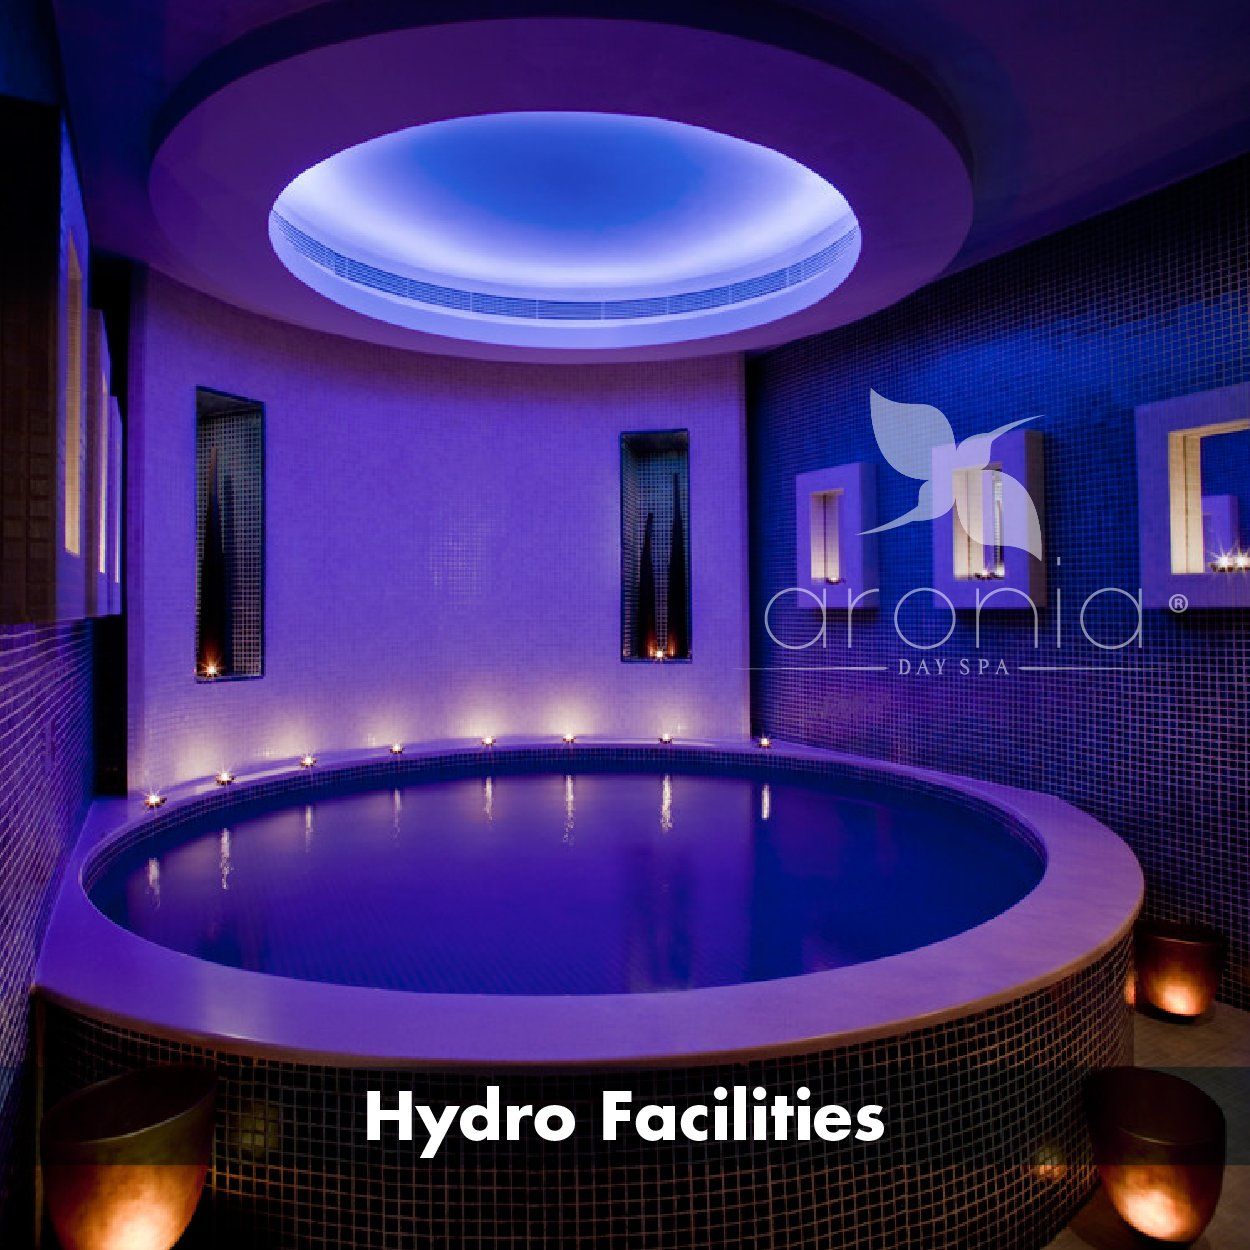 Hydro facilities